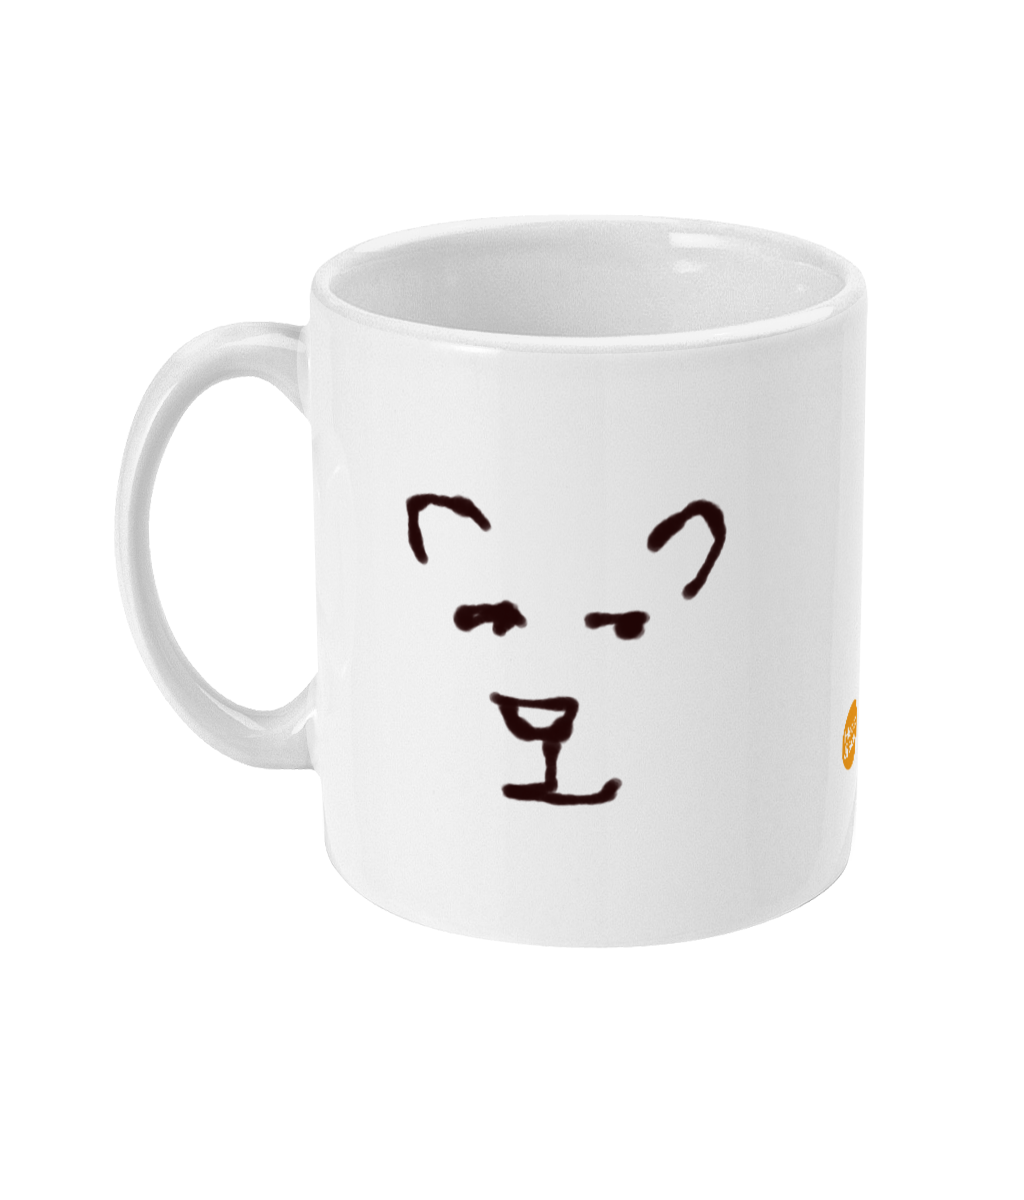 Polar Bear Mug - Cute Bear illustrated coffee mugs by Hector and Bone Left View